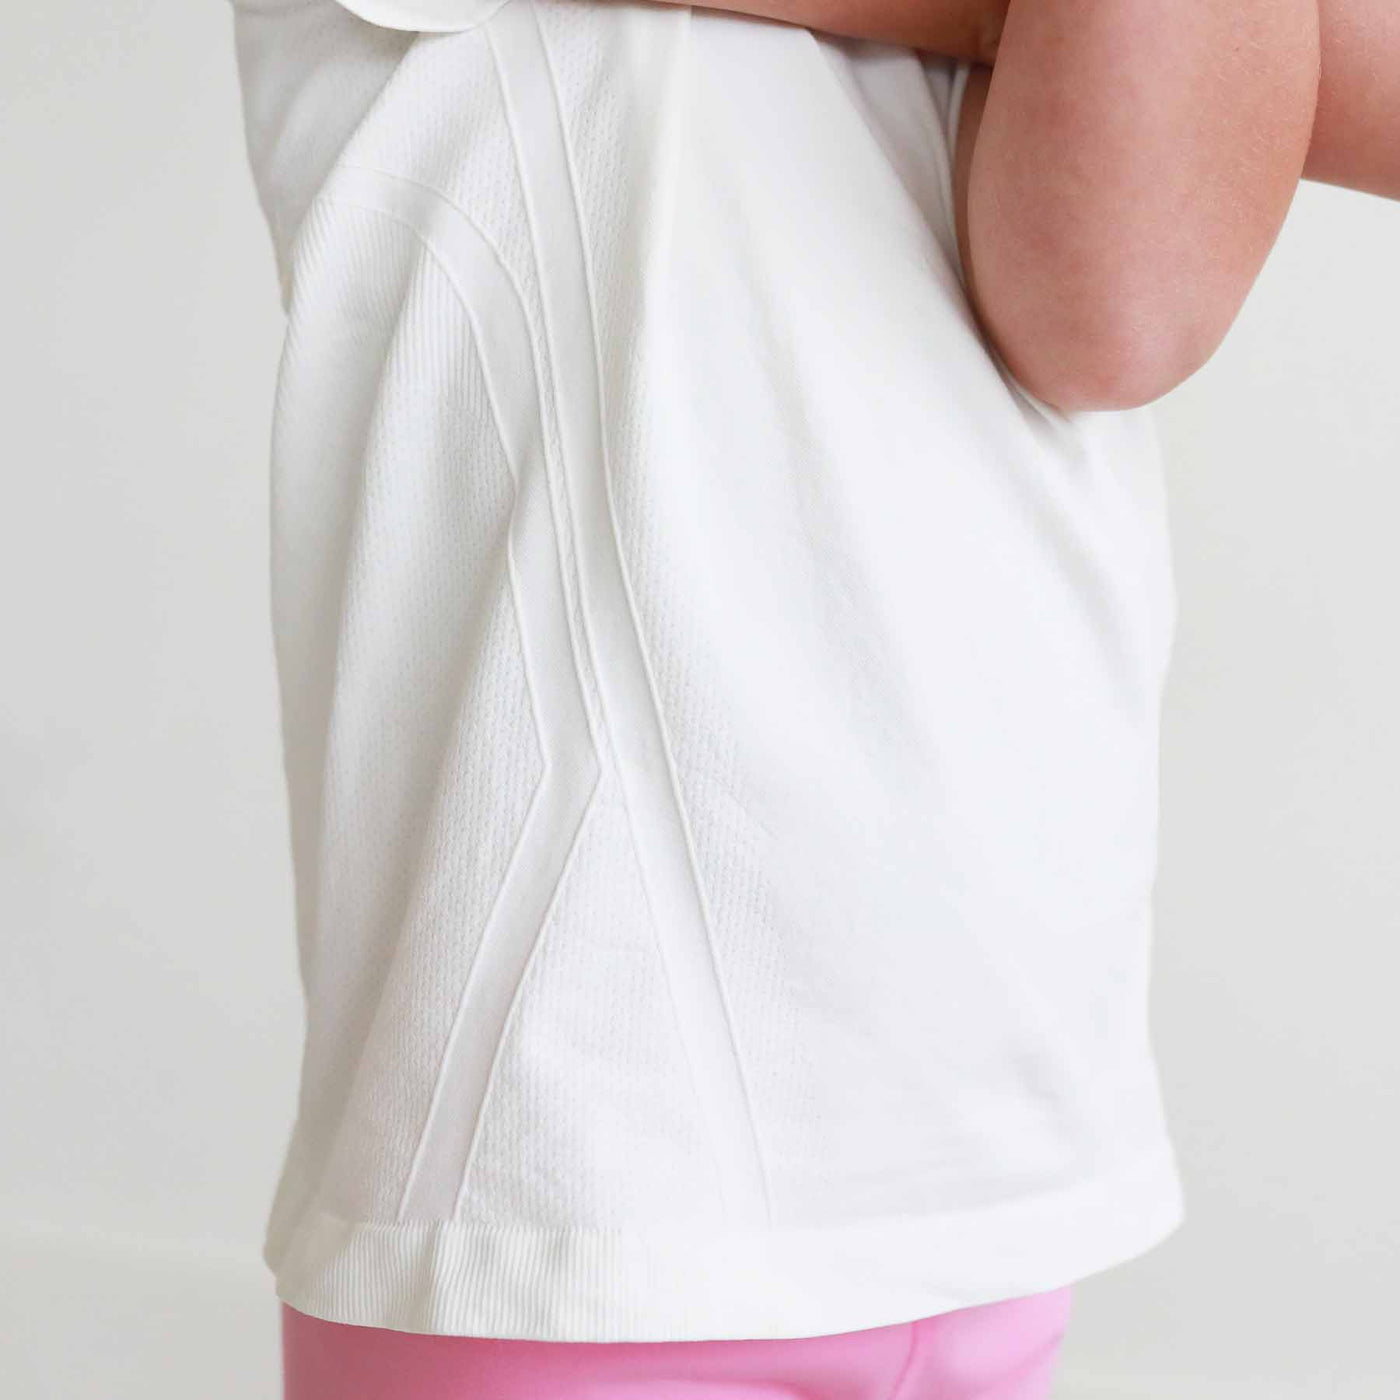 white short sleeve workout shirt for girls 